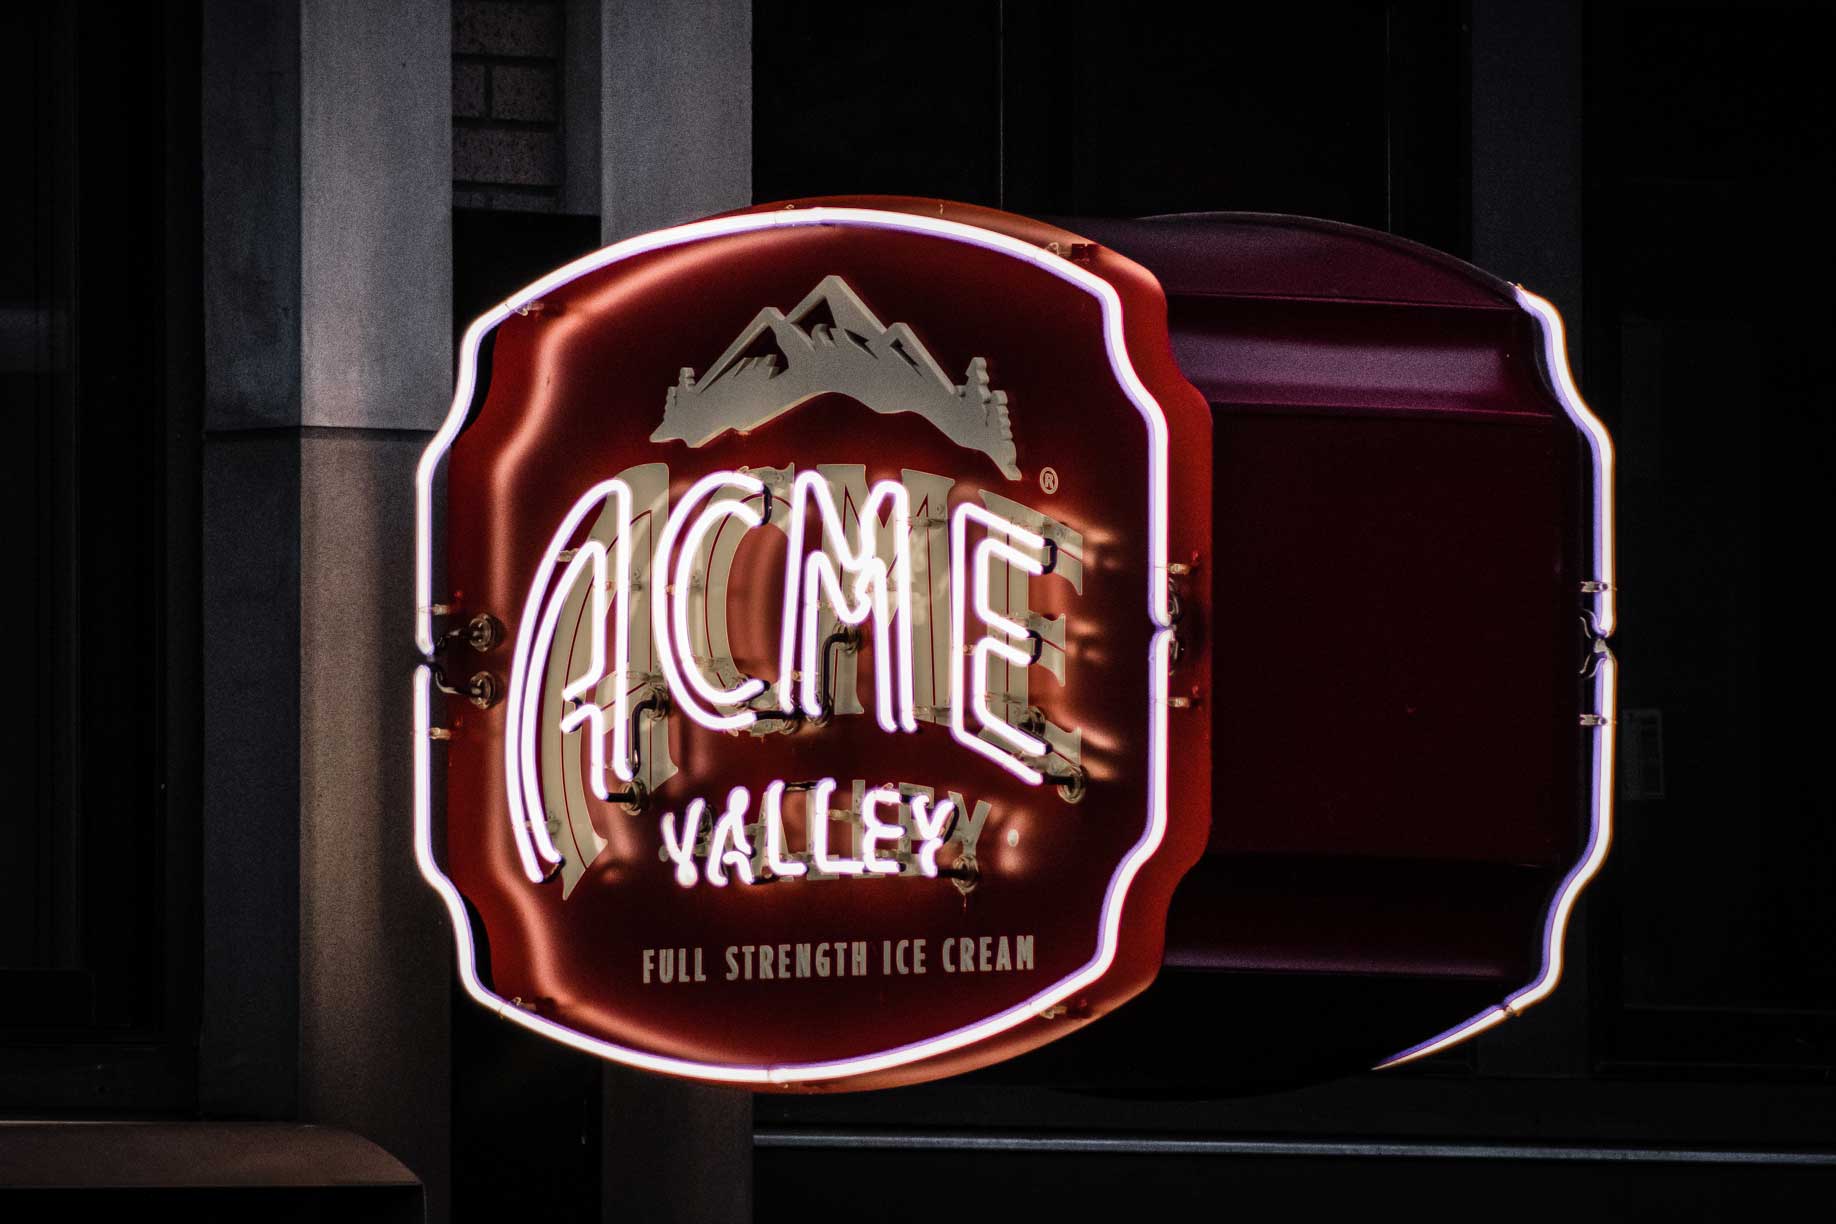 hospitality-acme-valley-ice-cream-illuminated-neon-sign